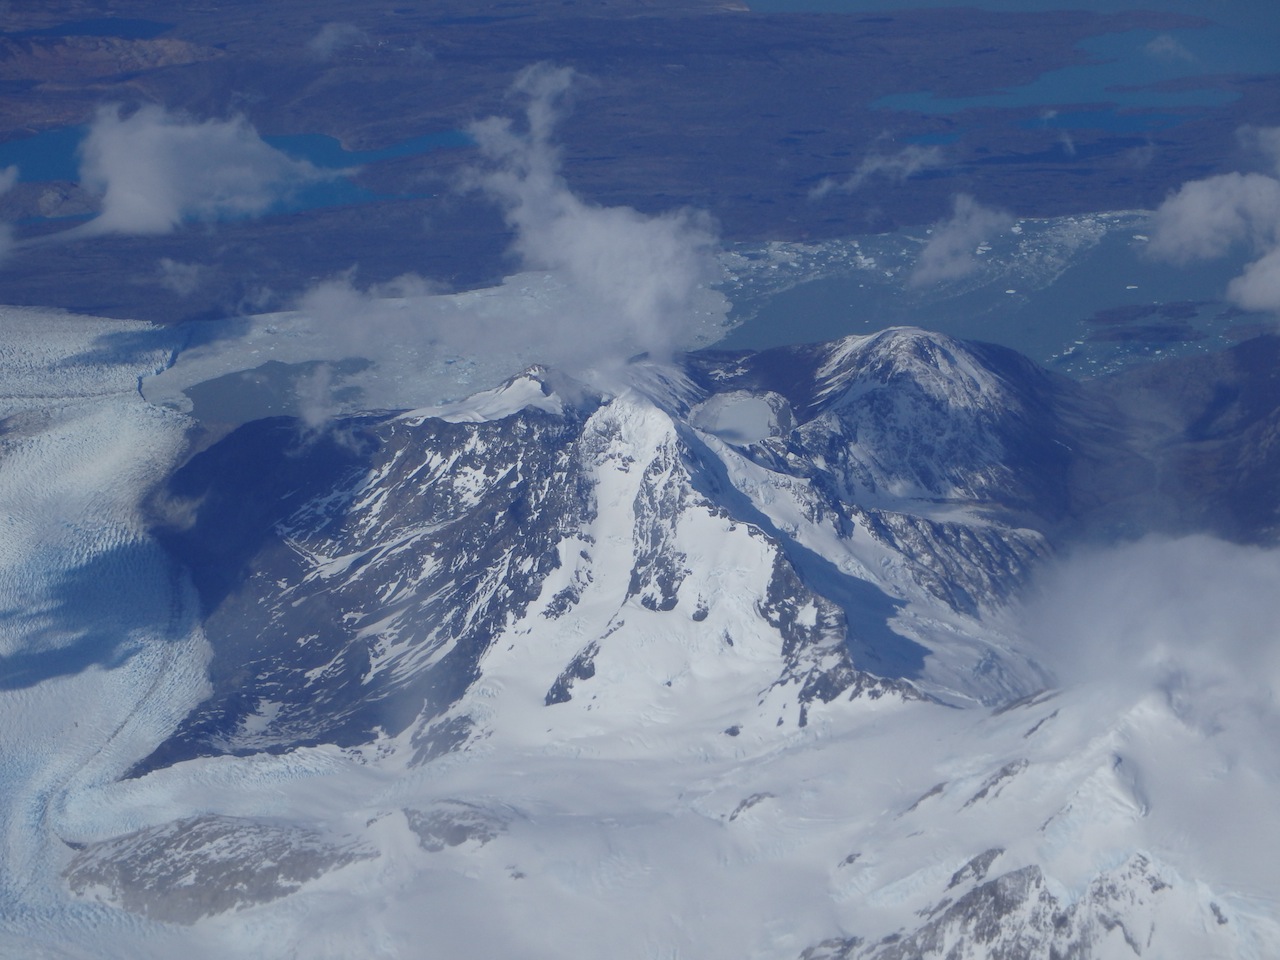 The view from the plane to Punta Arenas. Courtesy Austin Melillo.